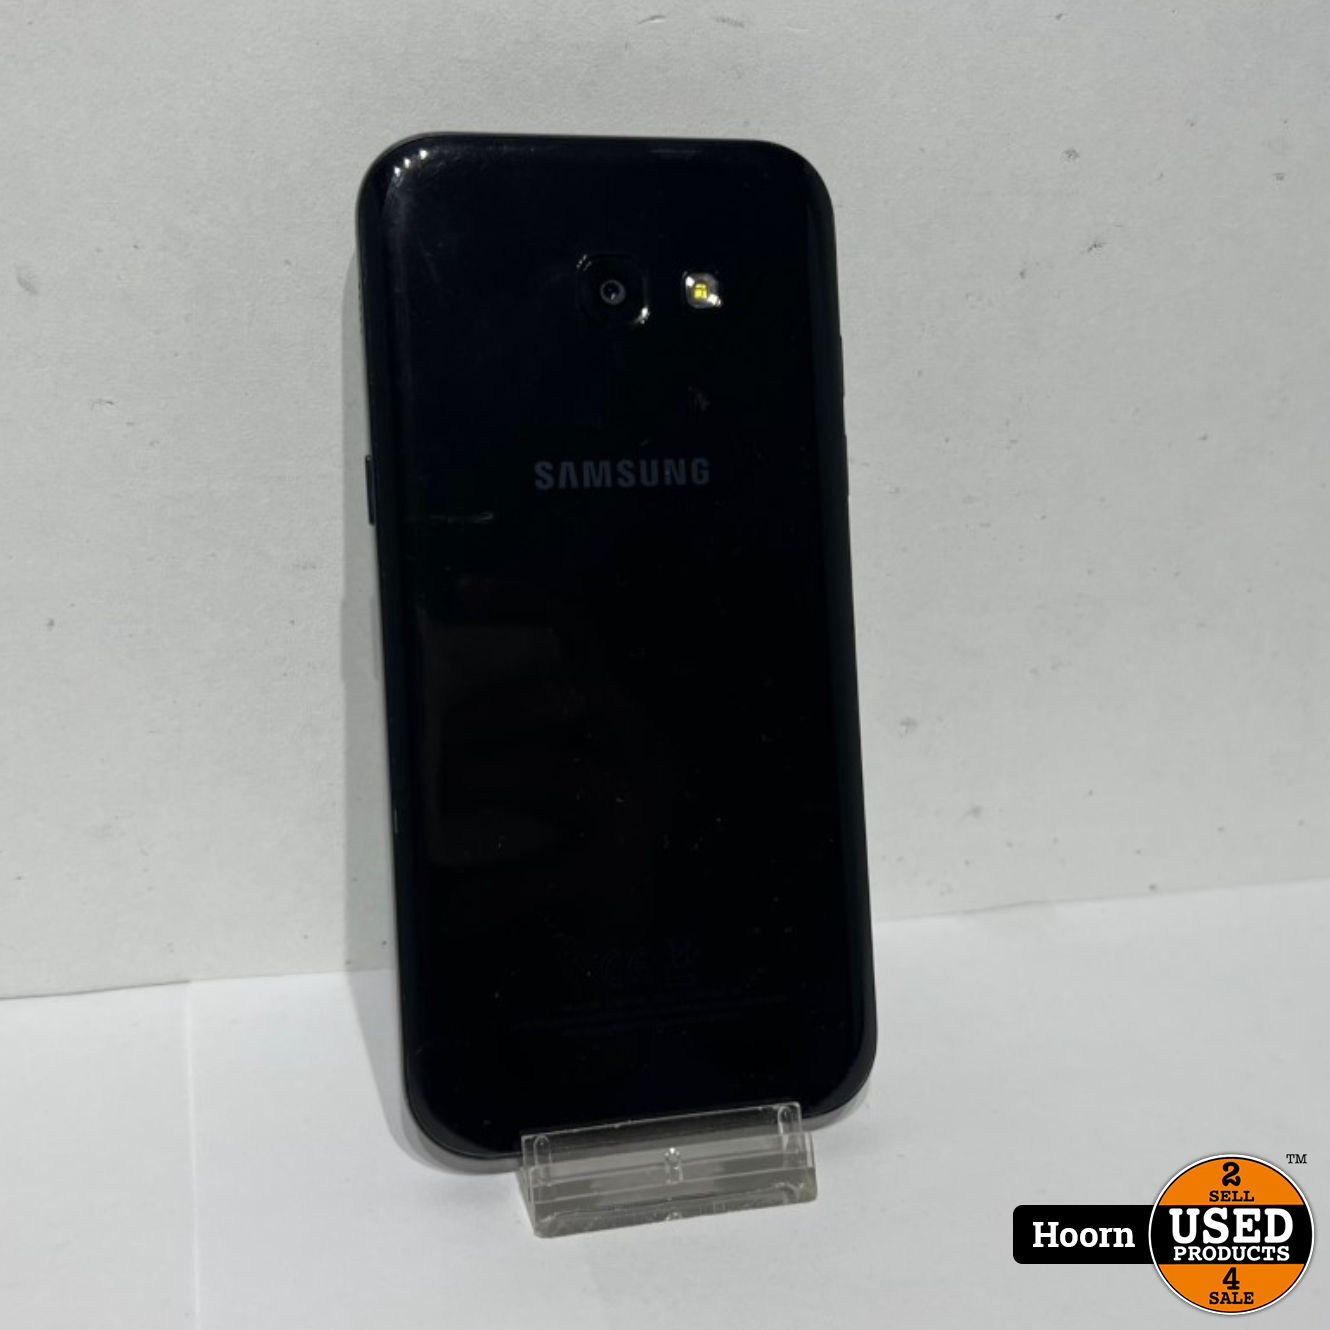 samsung Samsung Galaxy A5 32GB Zwart los Toestel incl. Lader Products